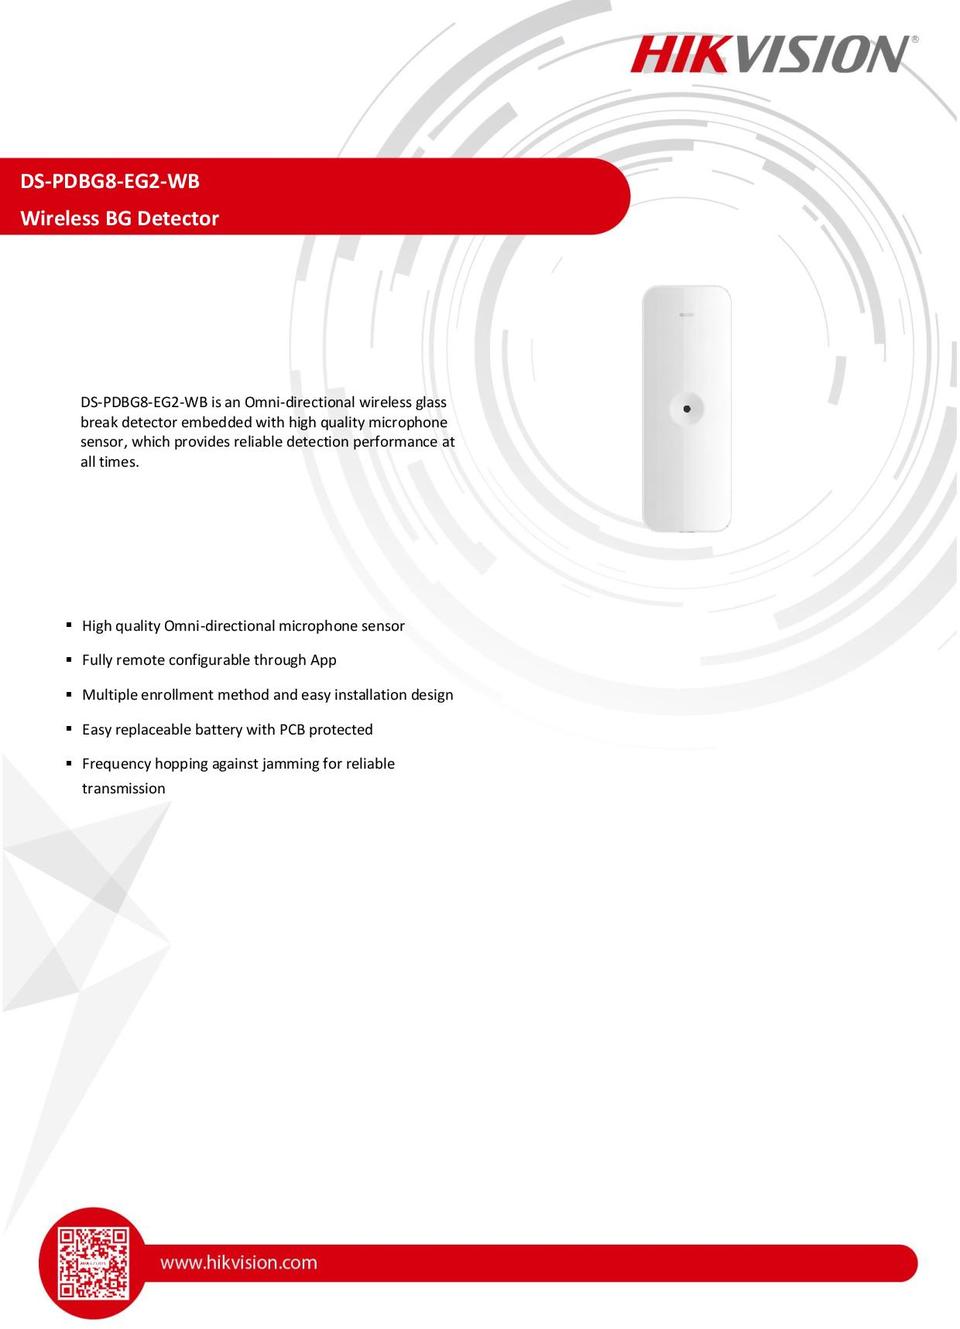 Hikvision DS-PDBG8-EG2-WB AX Pro Wireless Glass Break Detector 0